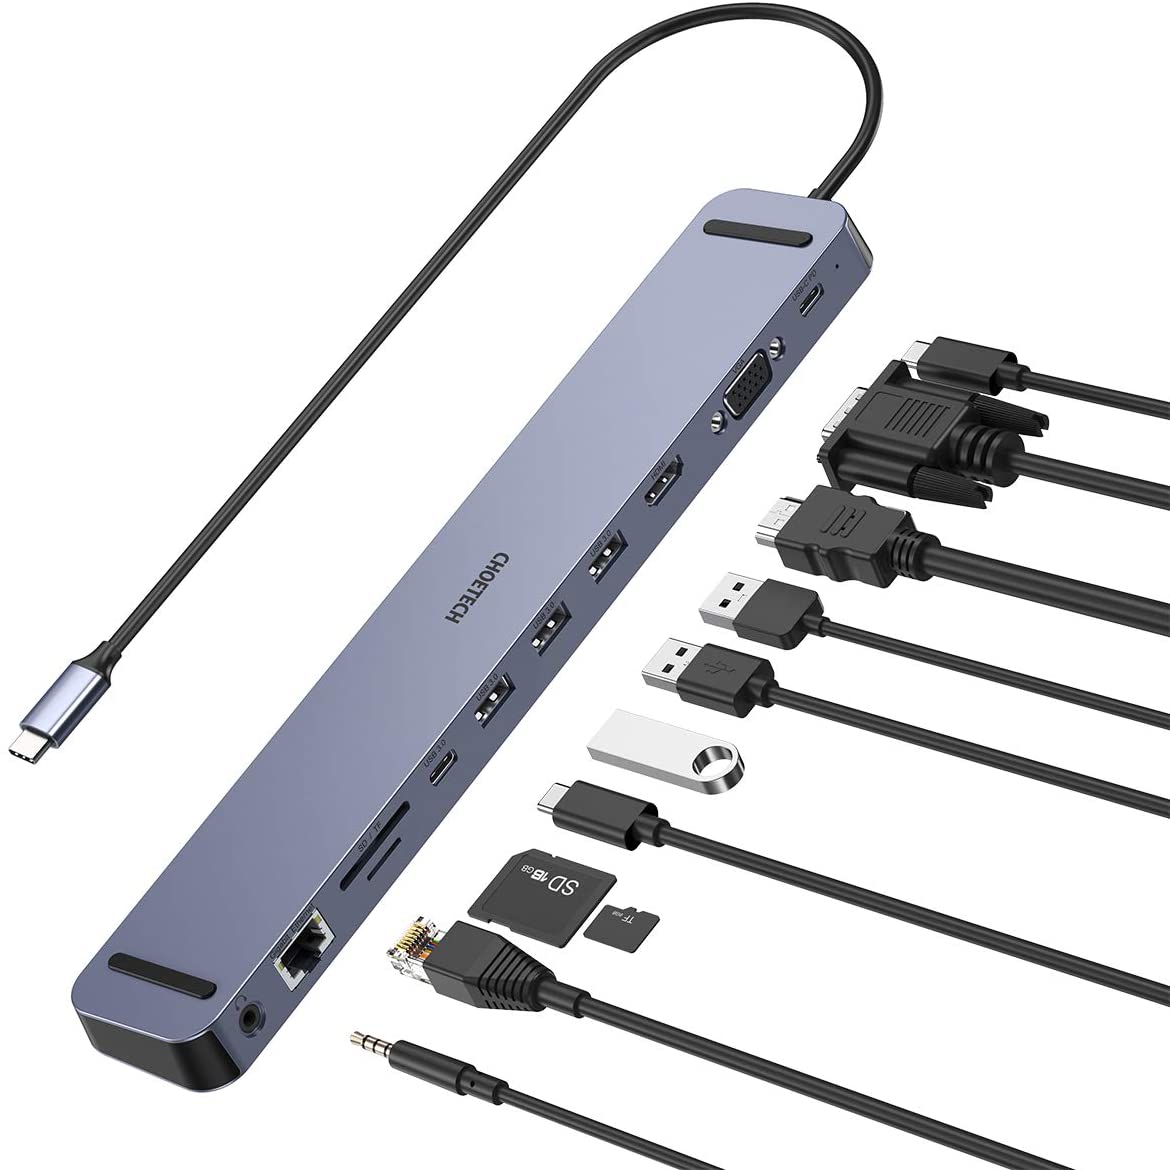 Adaptateur USB Type-C to HDMI 11 Ports - 4K HDMI VGA LAN RJ45